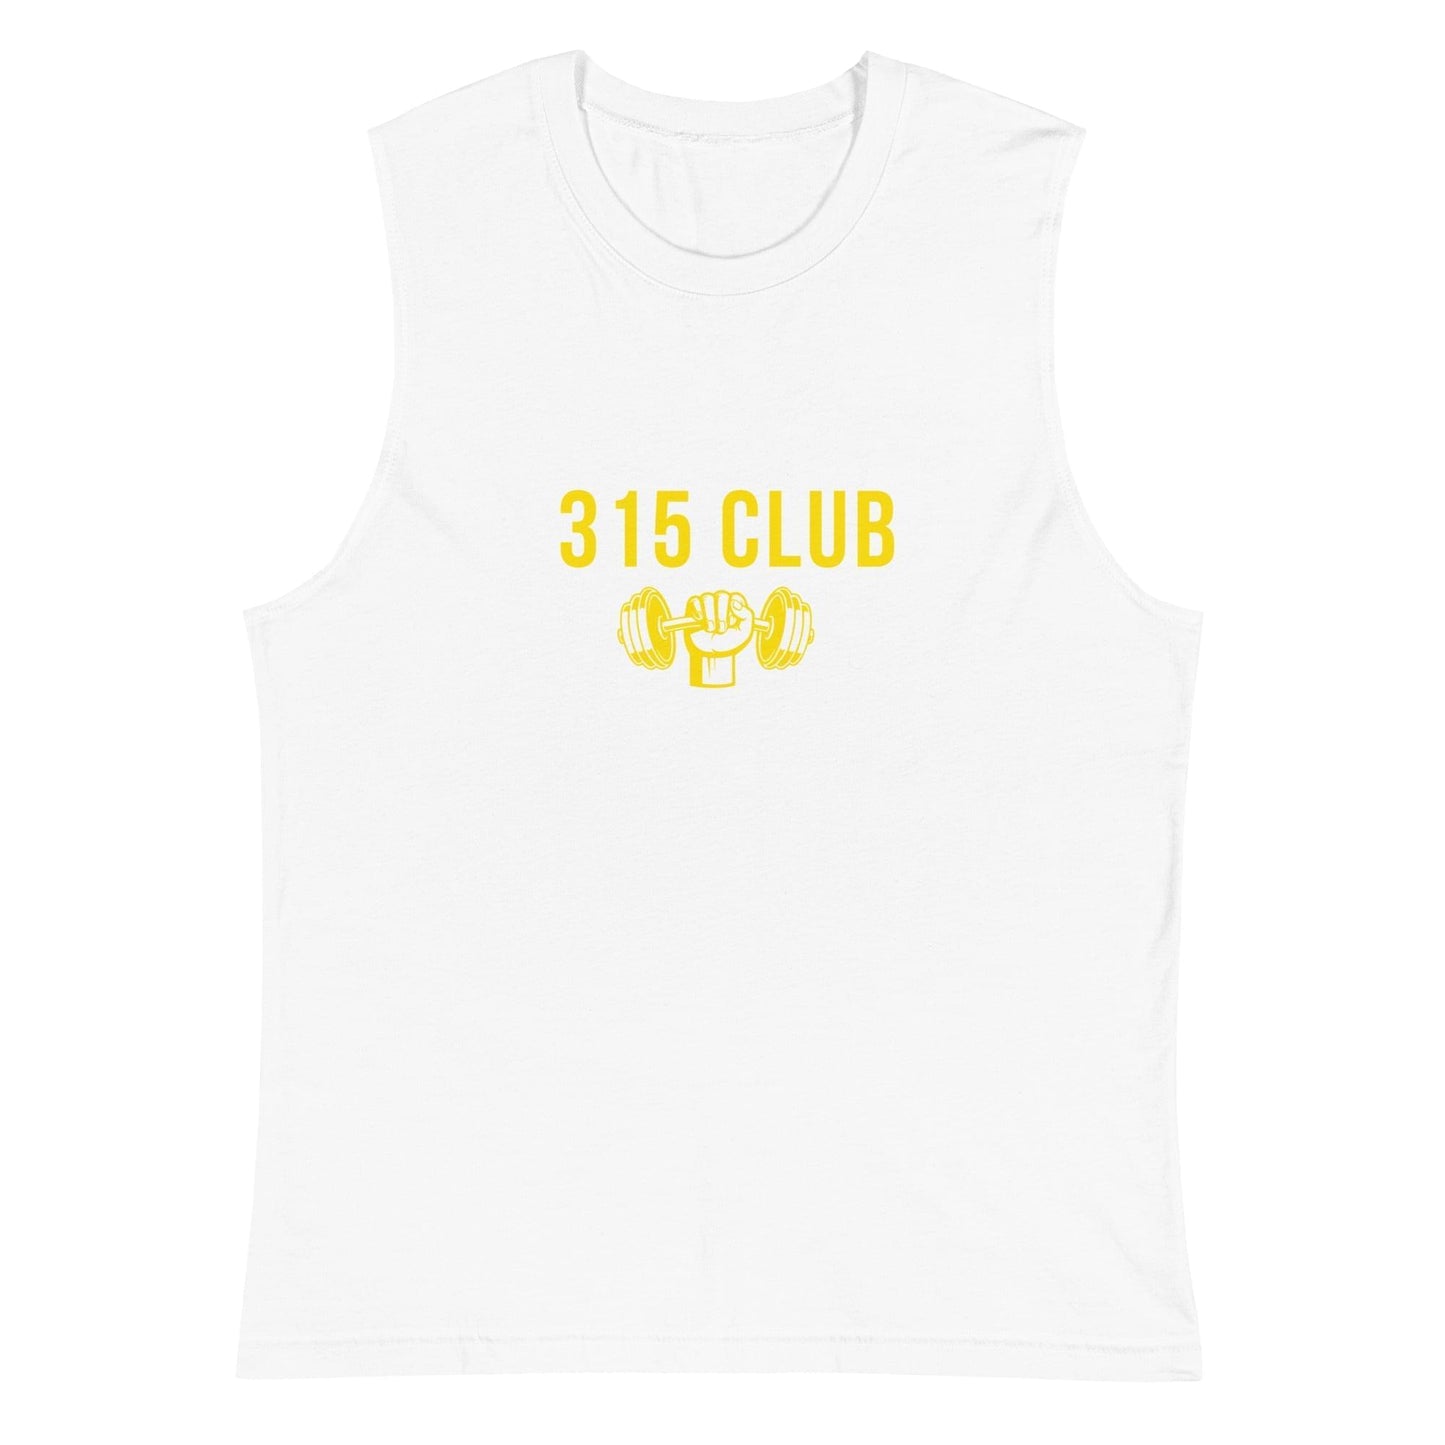 315 CLUB Muscle Tank-Top